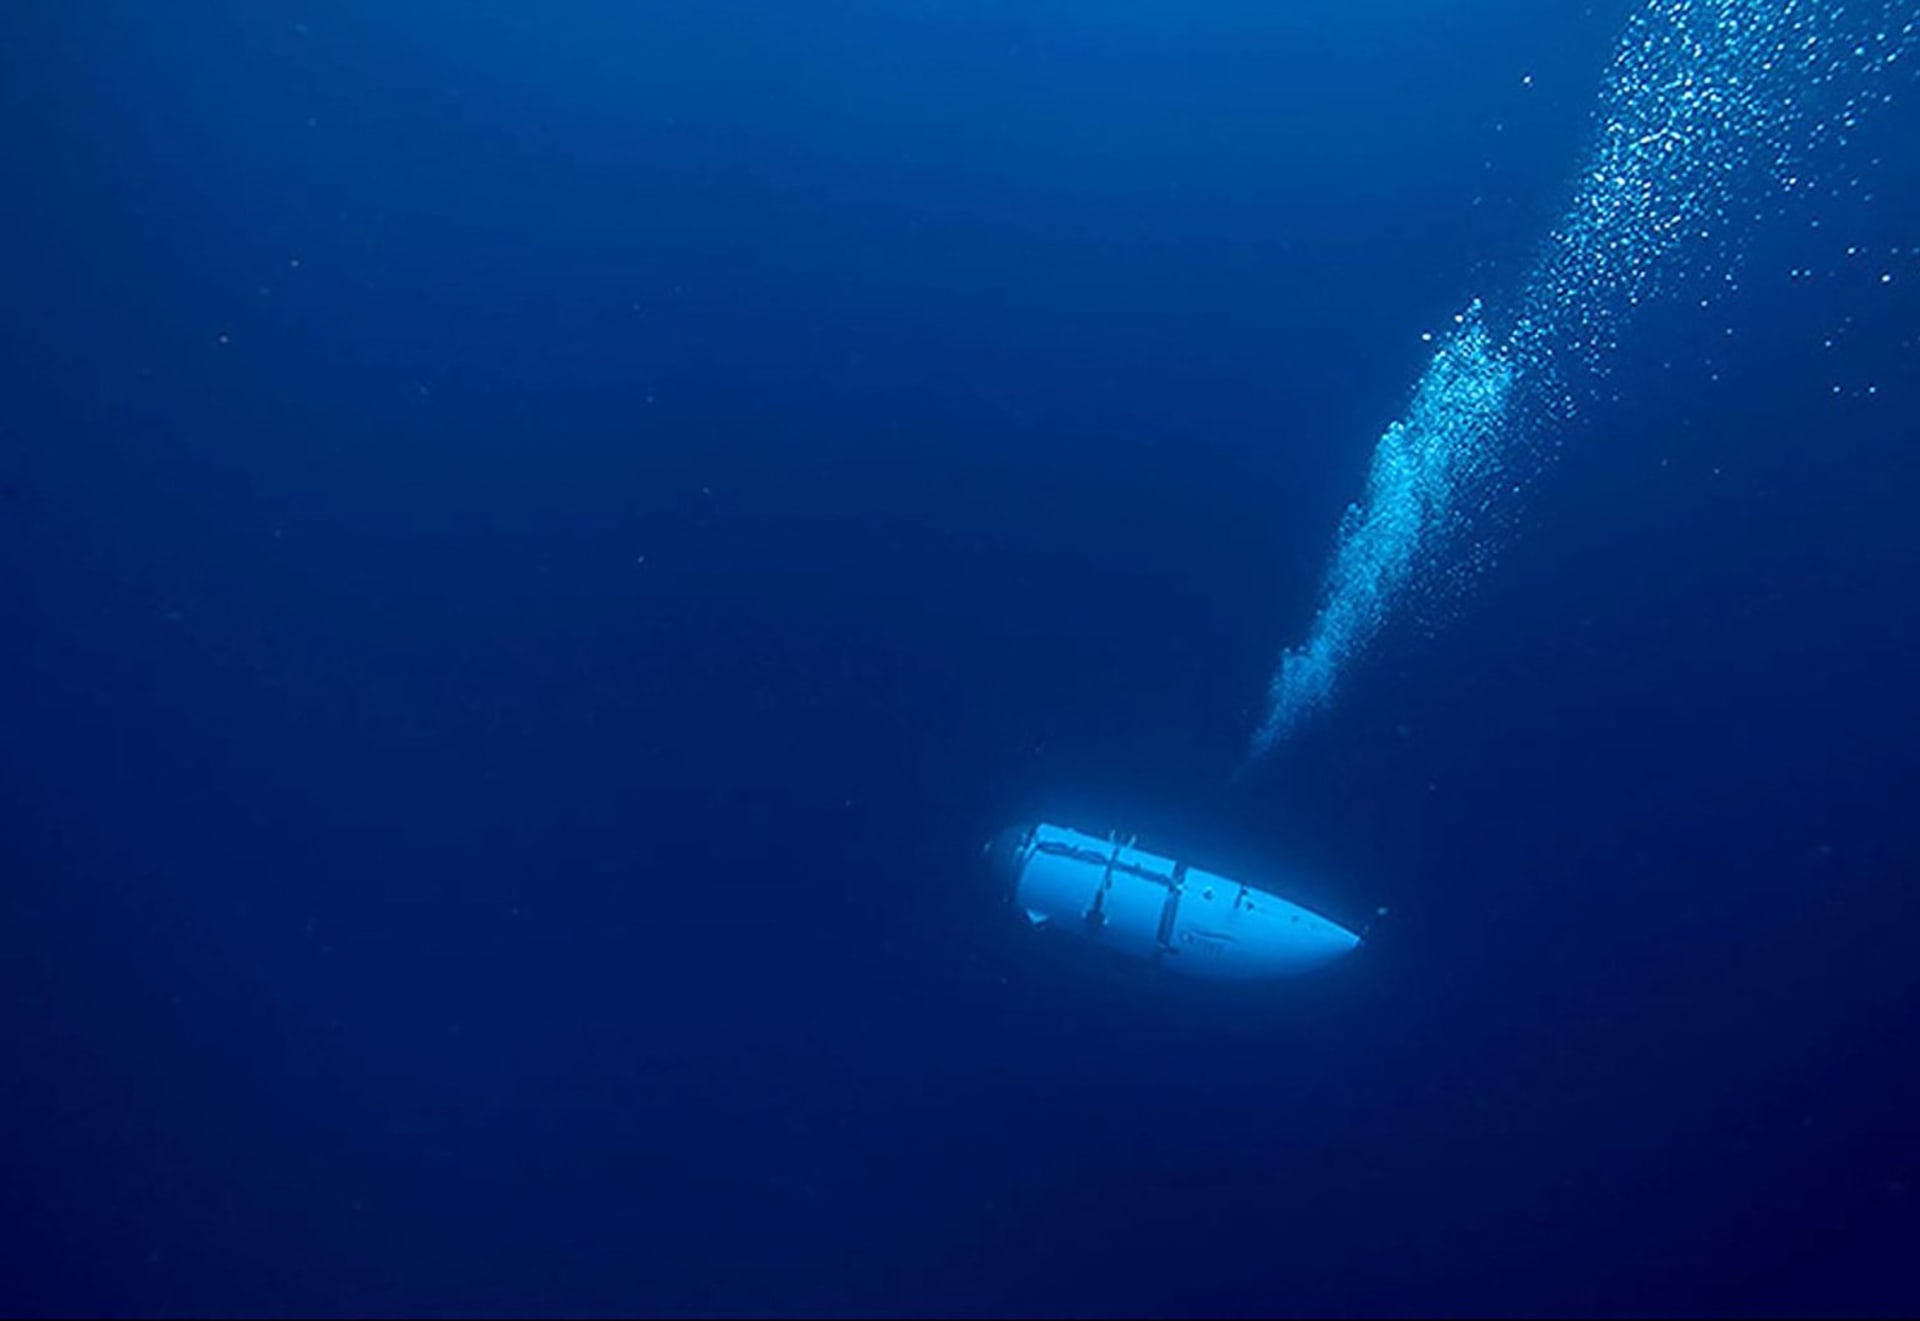 Ponorka Titan společnosti OceanGate Expeditions 